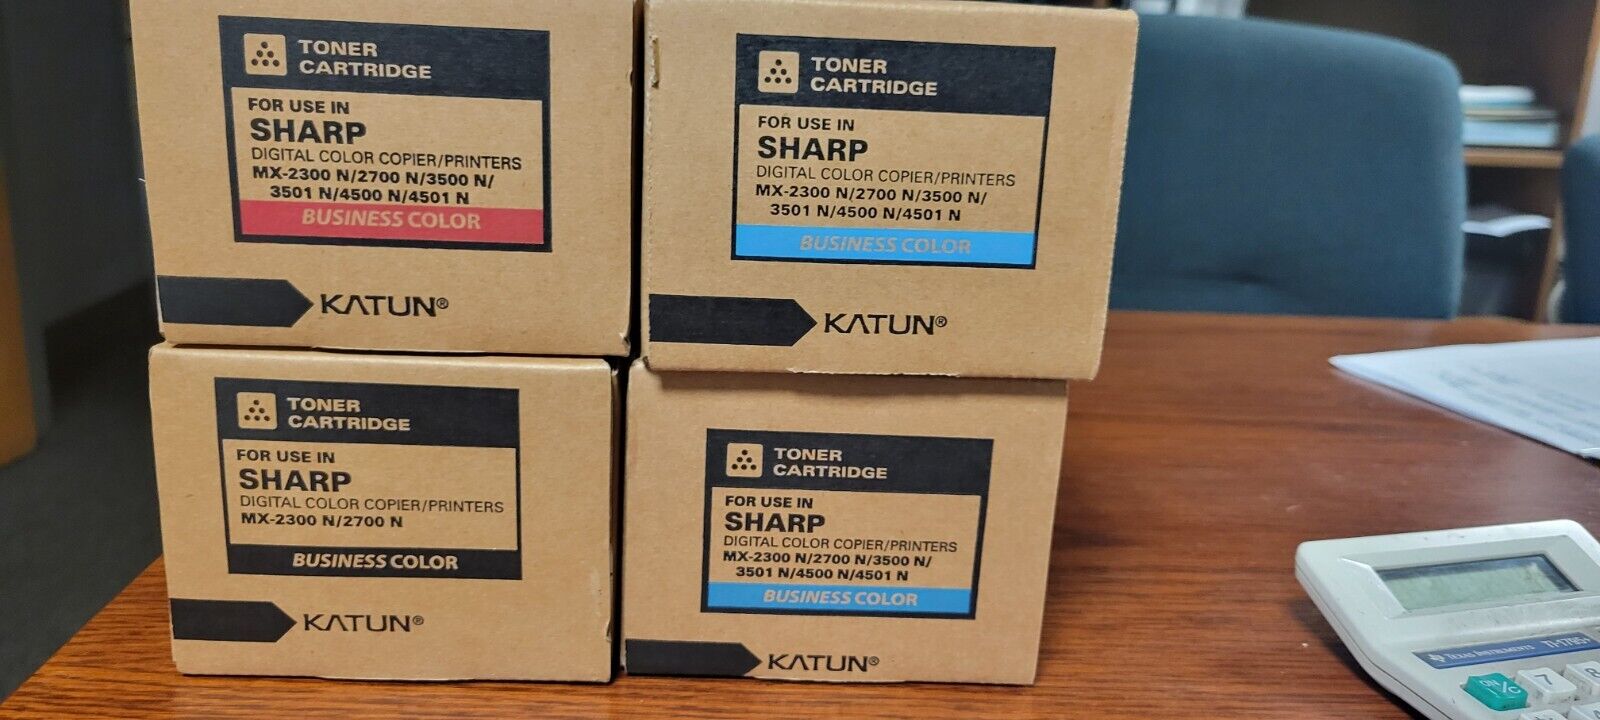 Katun toner cartridges - sold as set